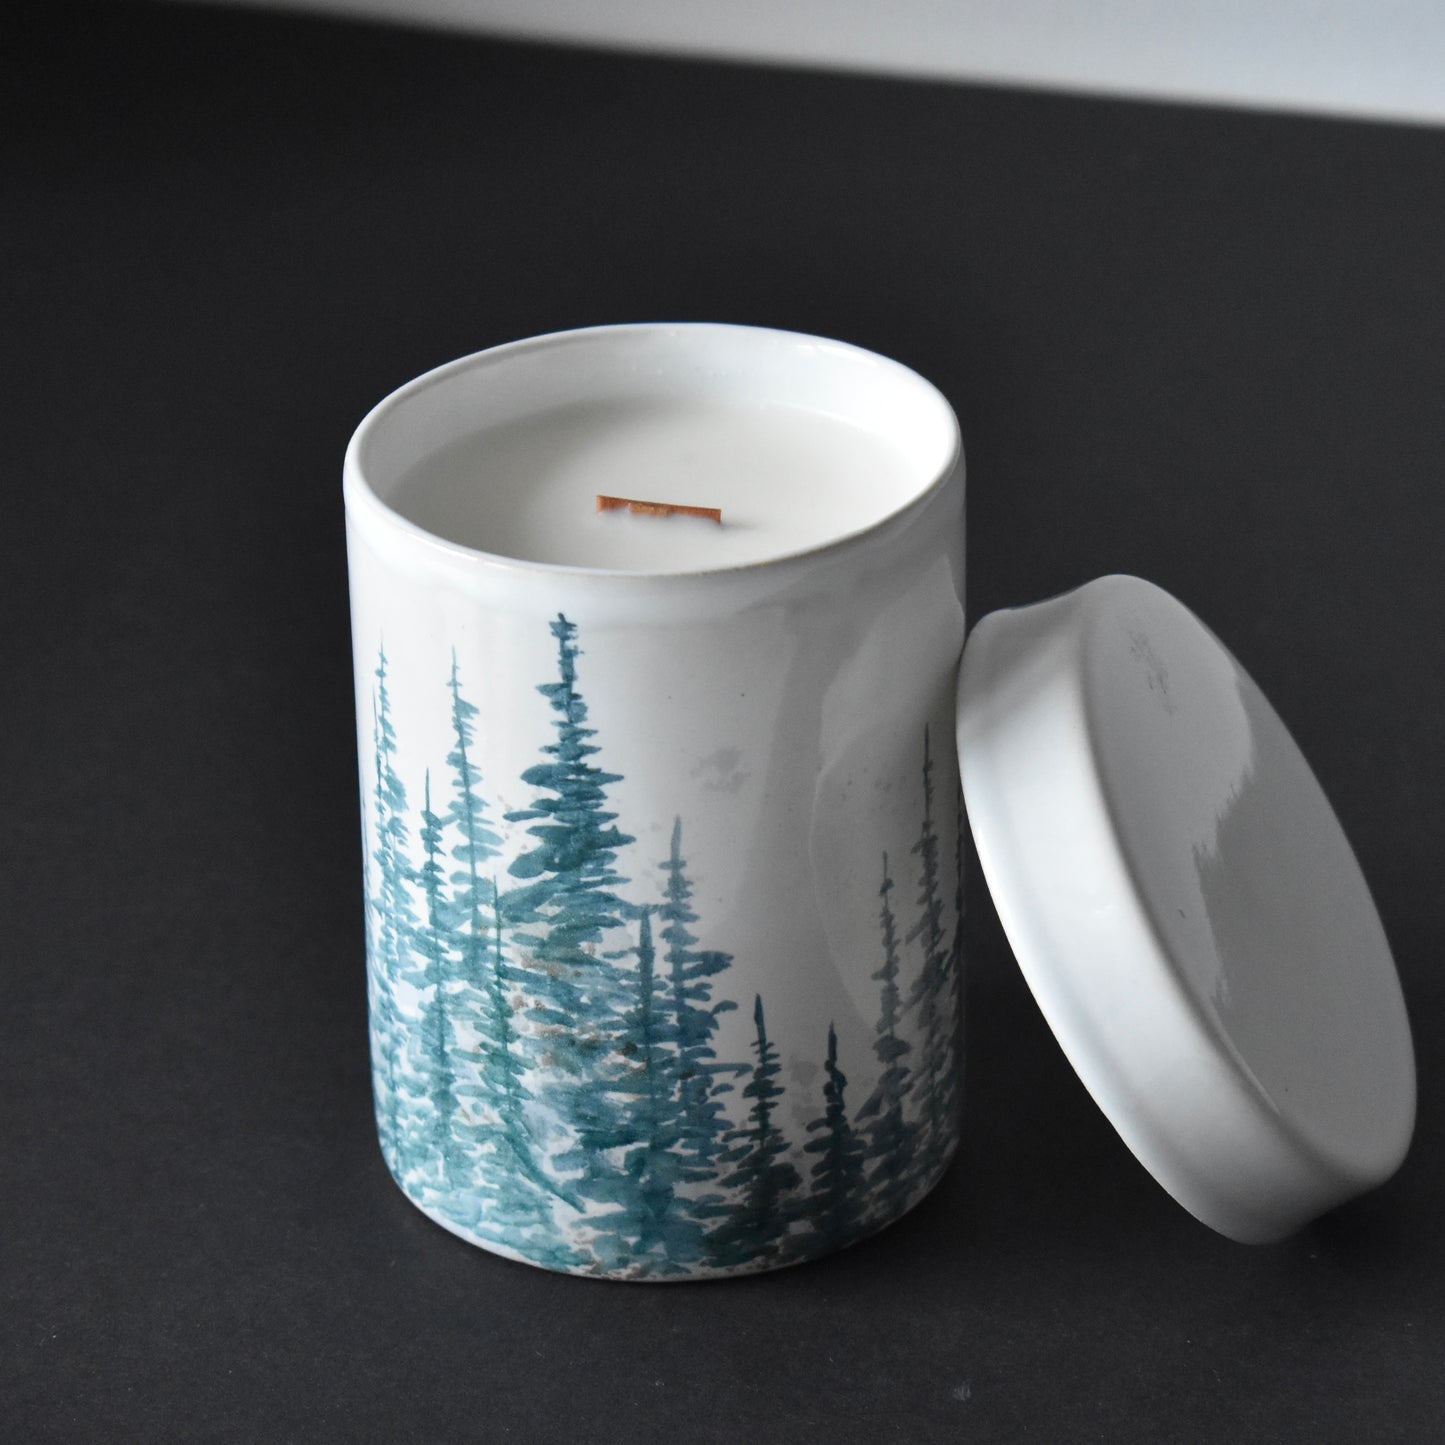 Ceramic jar with candle